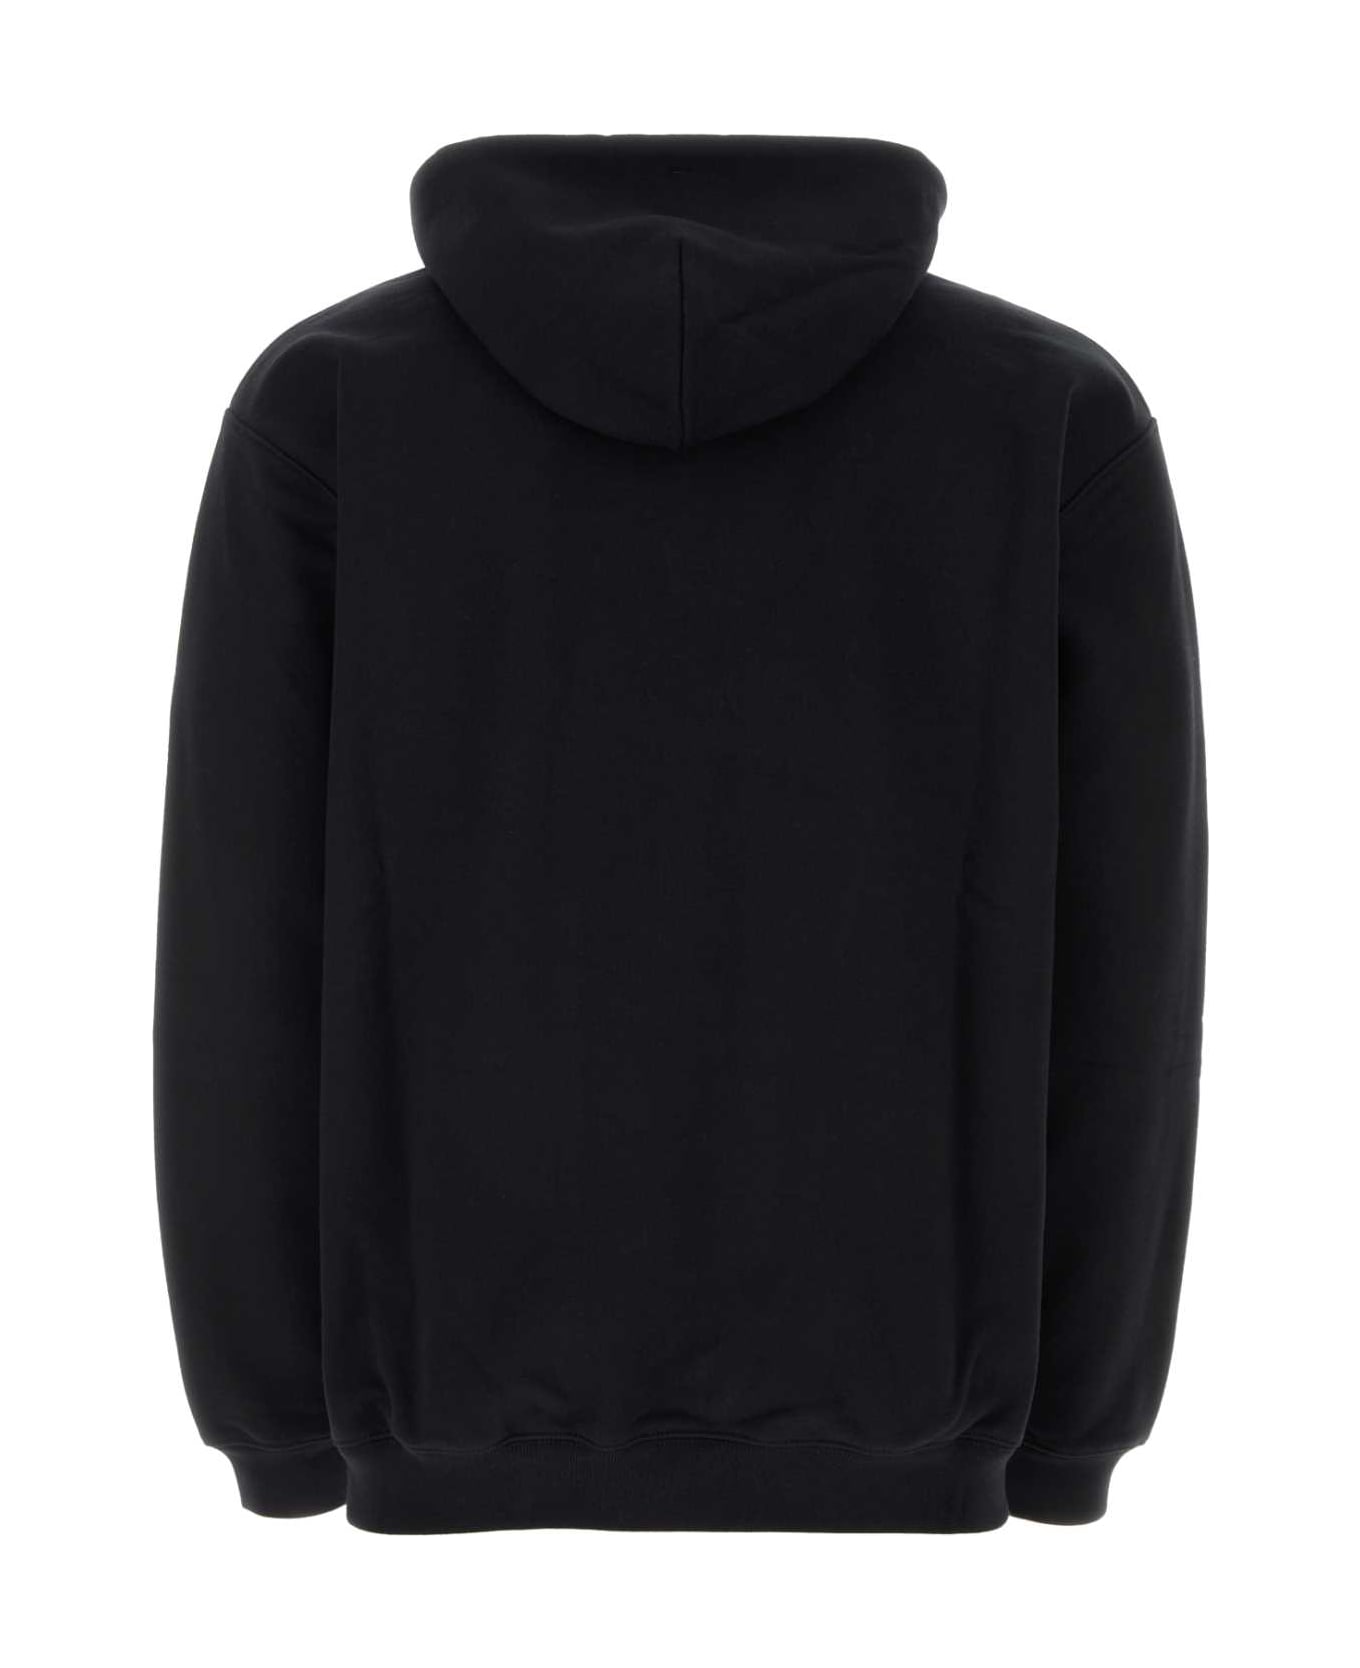 VTMNTS Black Cotton Blend Sweatshirt - Black フリース